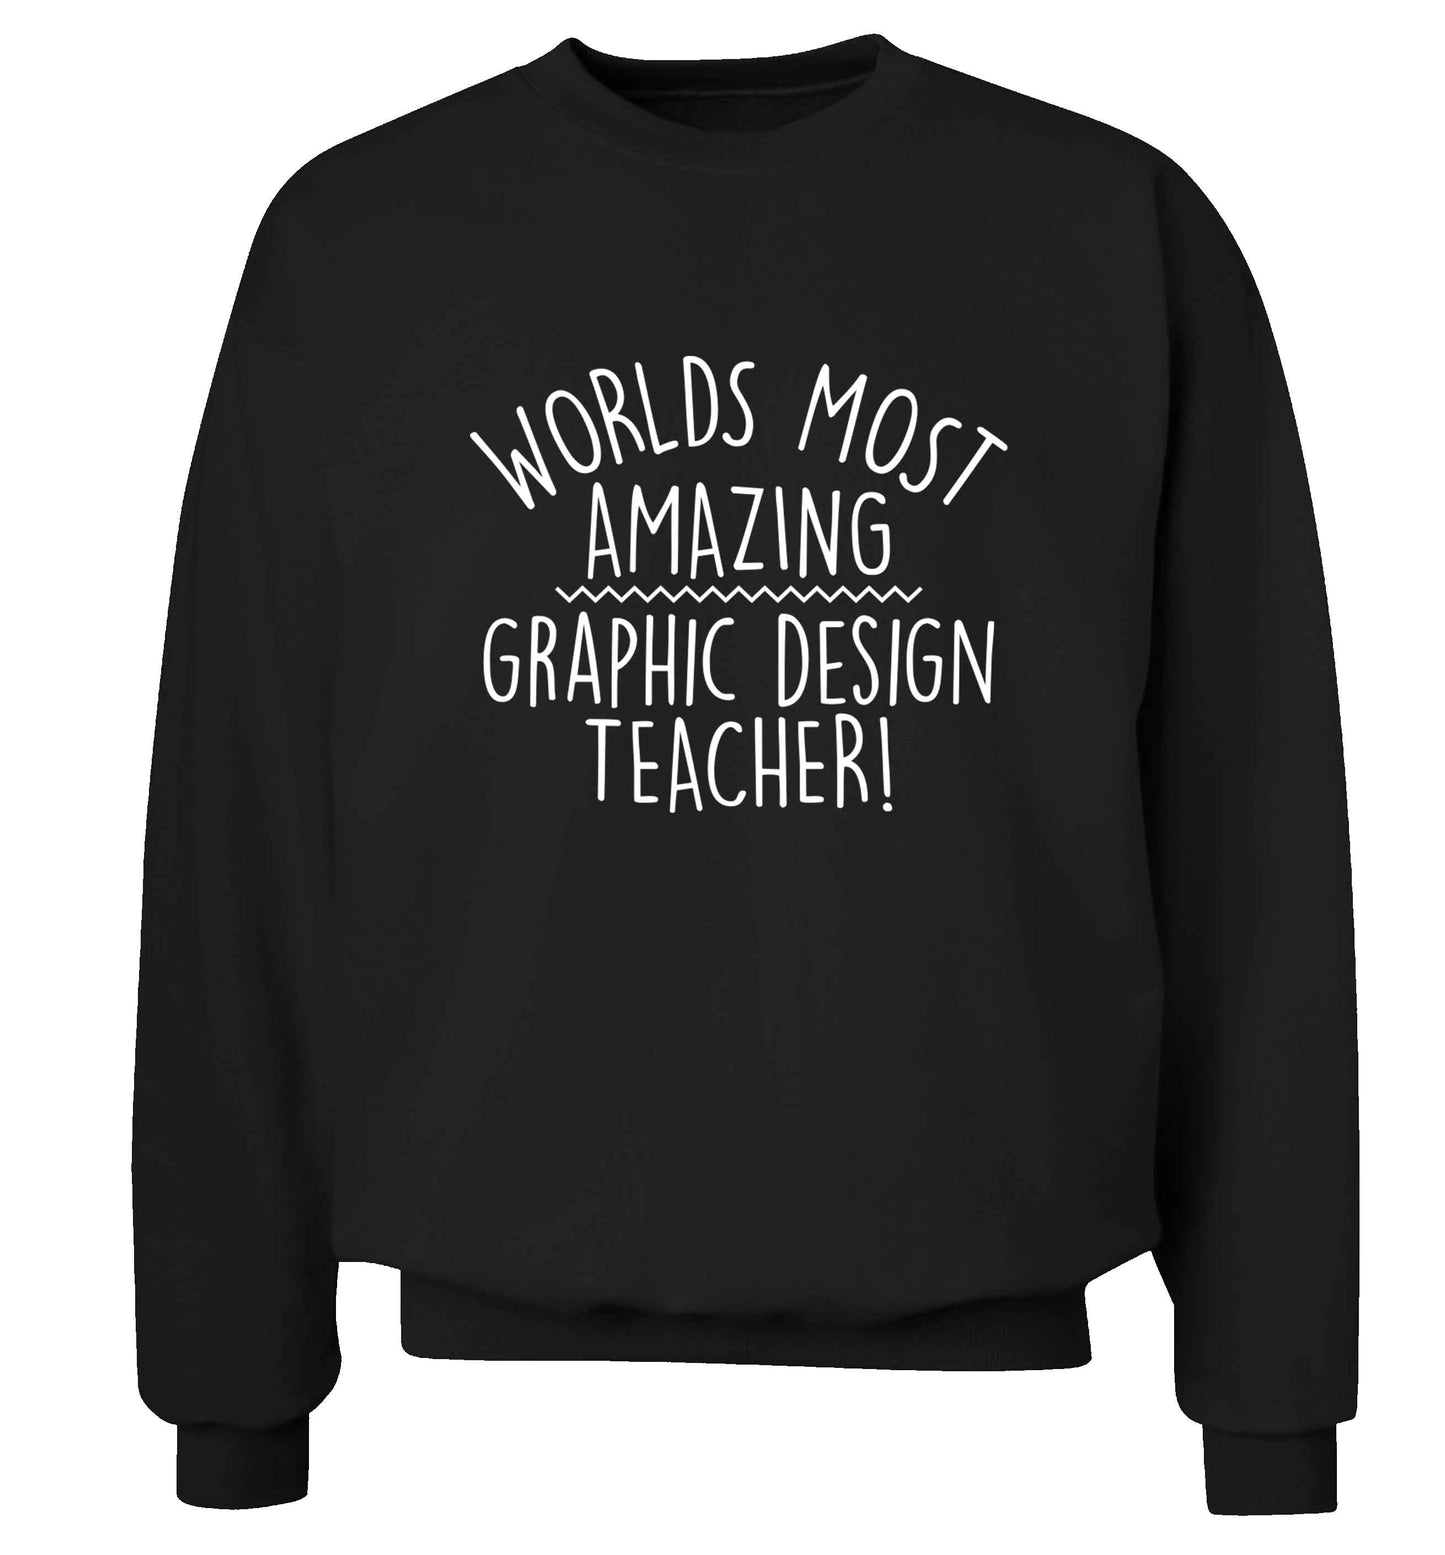 Worlds most amazing graphic design teacher adult's unisex black sweater 2XL